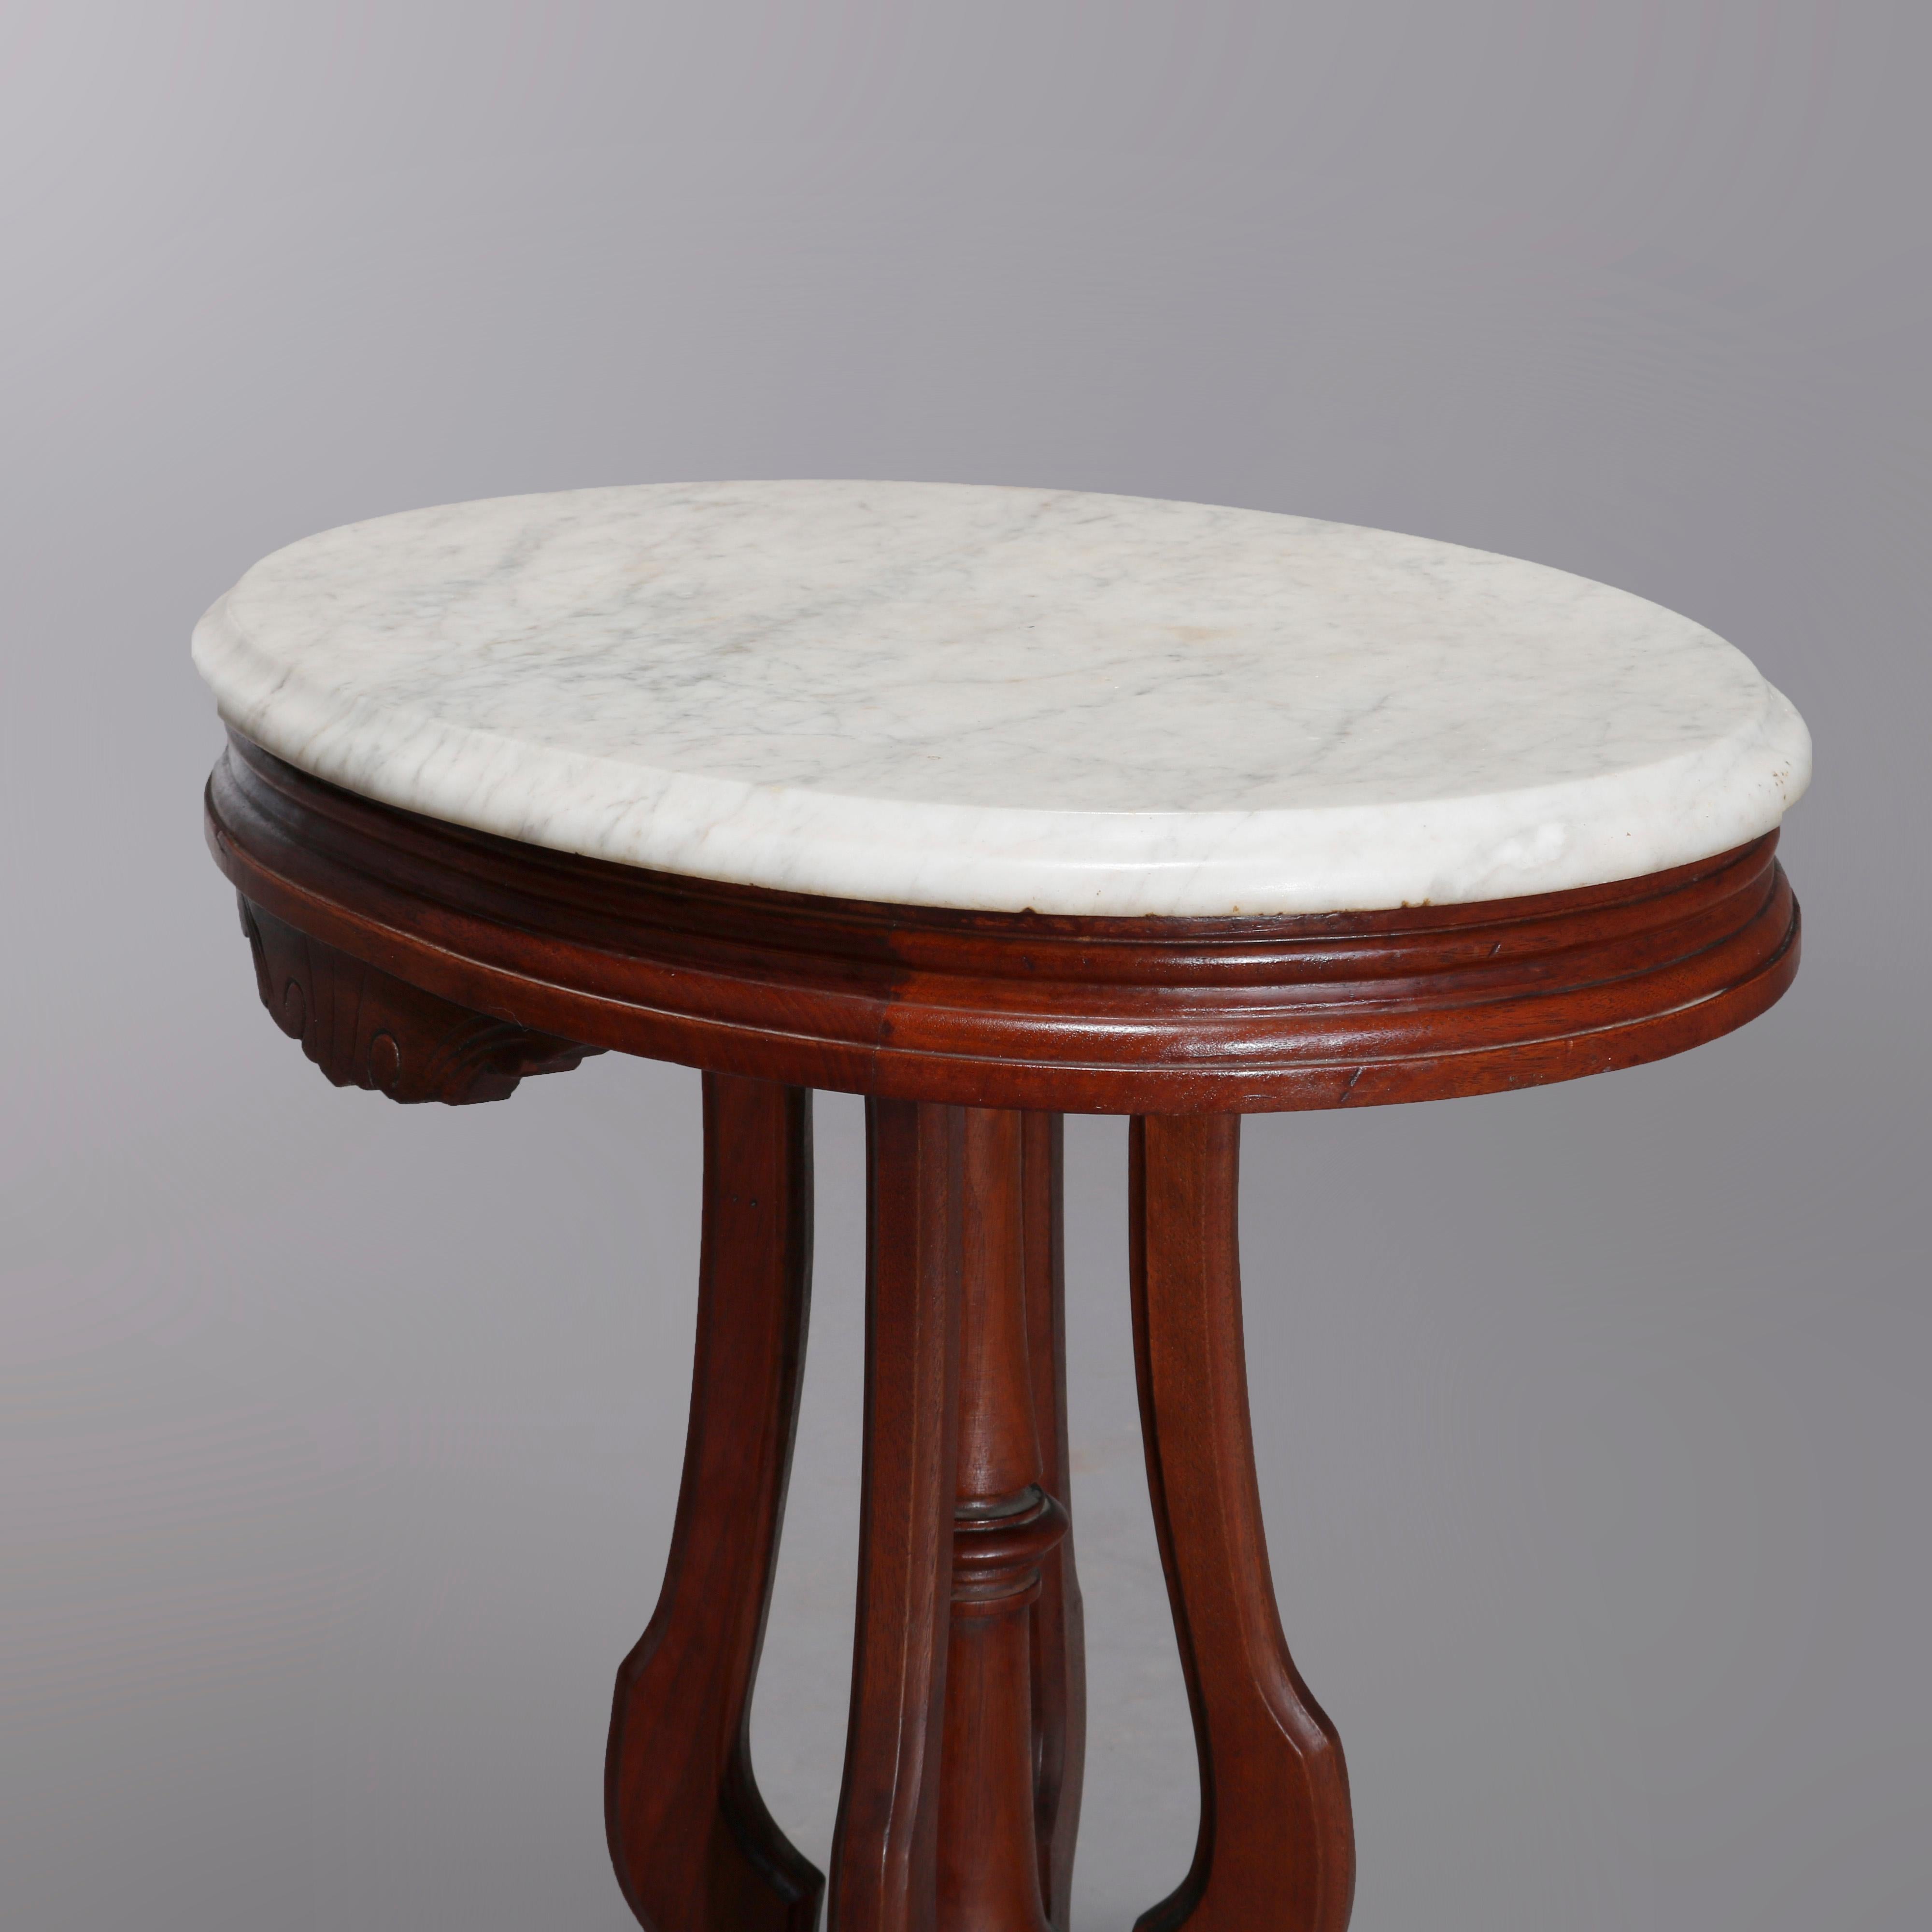 Victorian Antique Renaissance Revival Walnut Oval Marble Top Table, Circa 1890